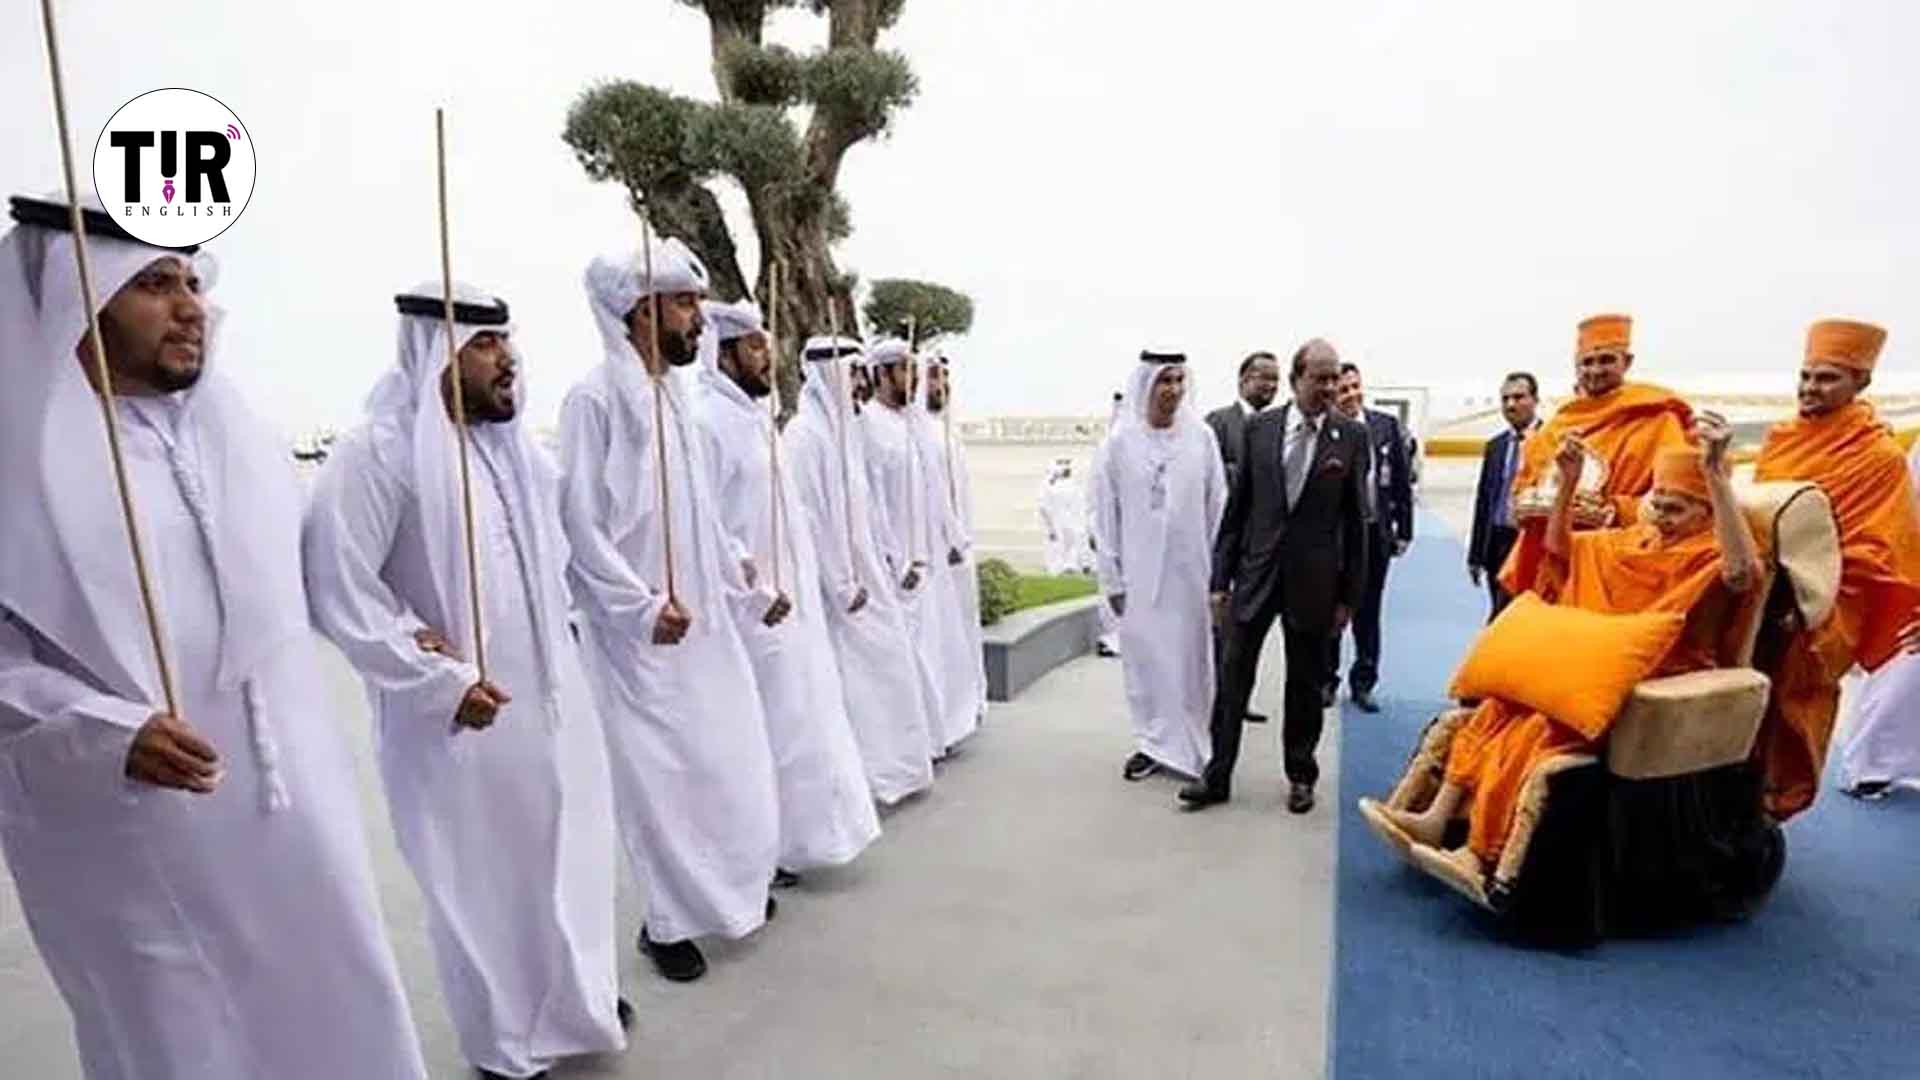 BAPS temple inauguration: Mahant Swami Maharaj arrives in Abu Dhabi